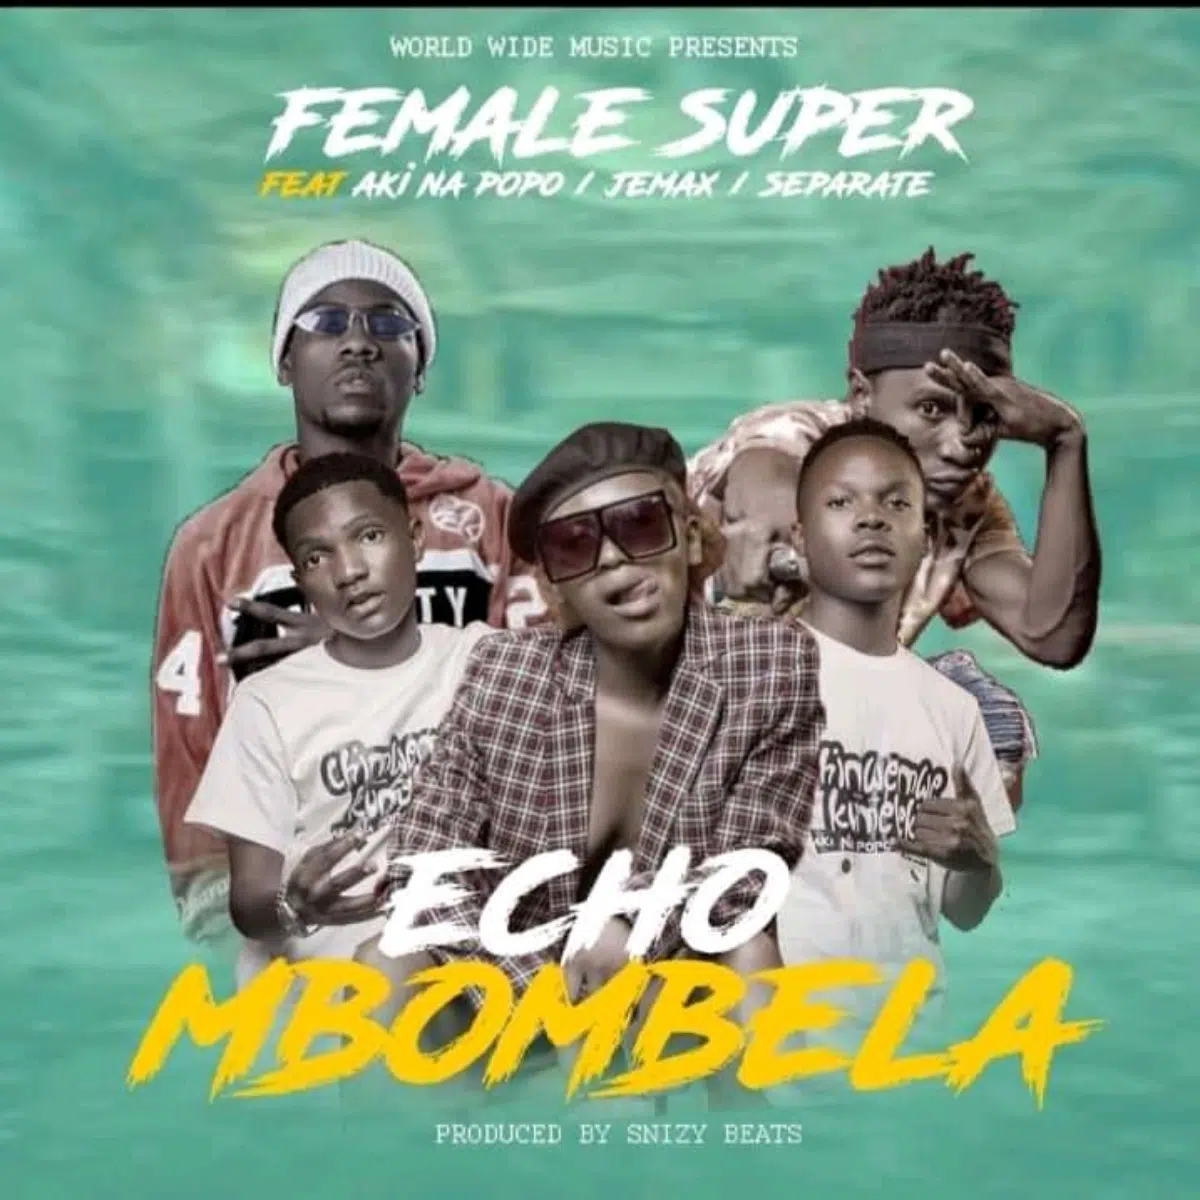 DOWNLOAD: Female Super Ft Aki Na PoPo x Jemax x separate – “Echo Mbombela” Mp3